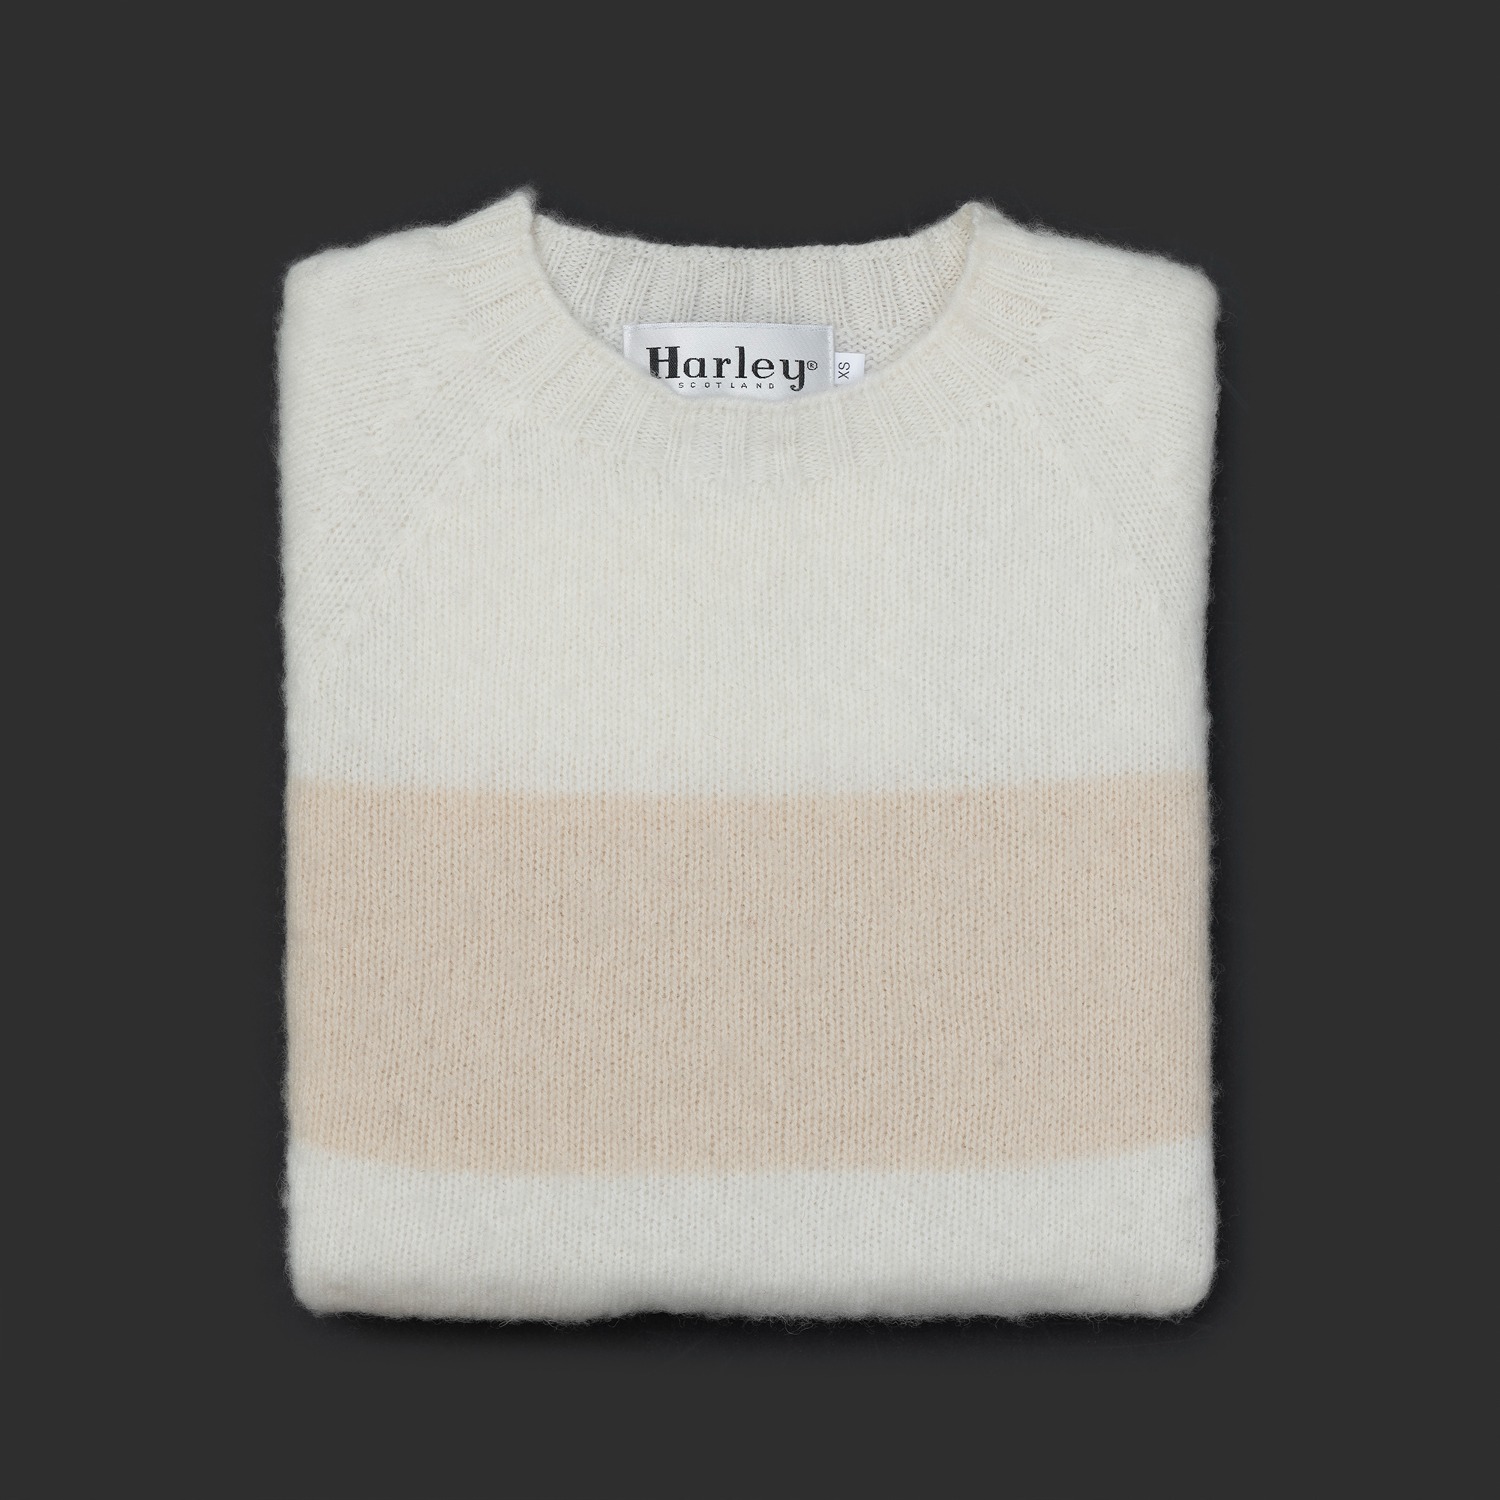 ﻿Shaggy Dog Border Sweater - White/Cream